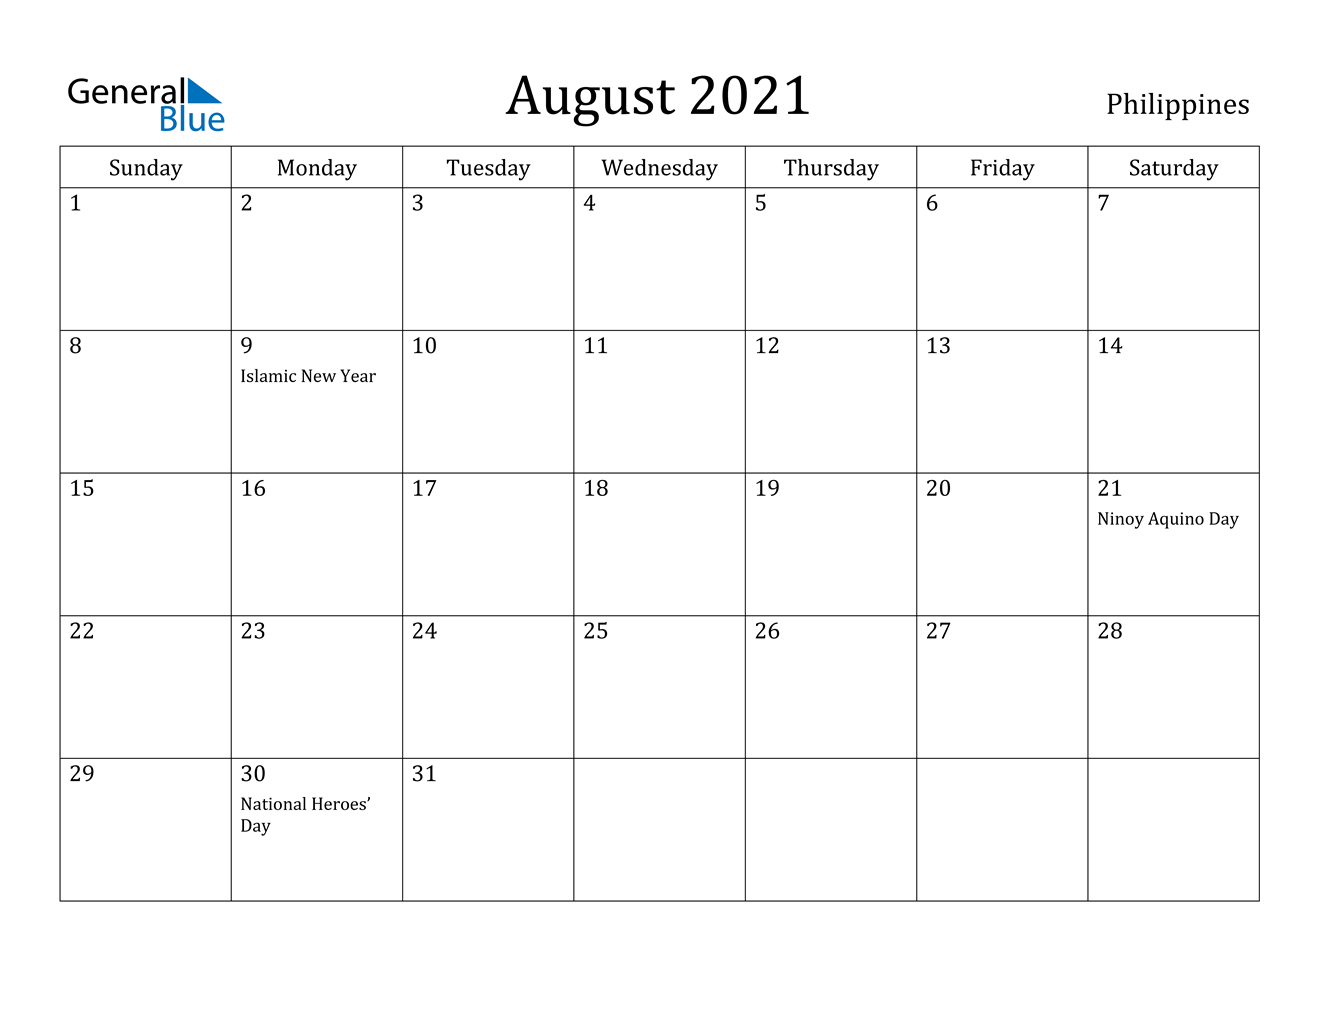 August 2021 Calendar - Philippines